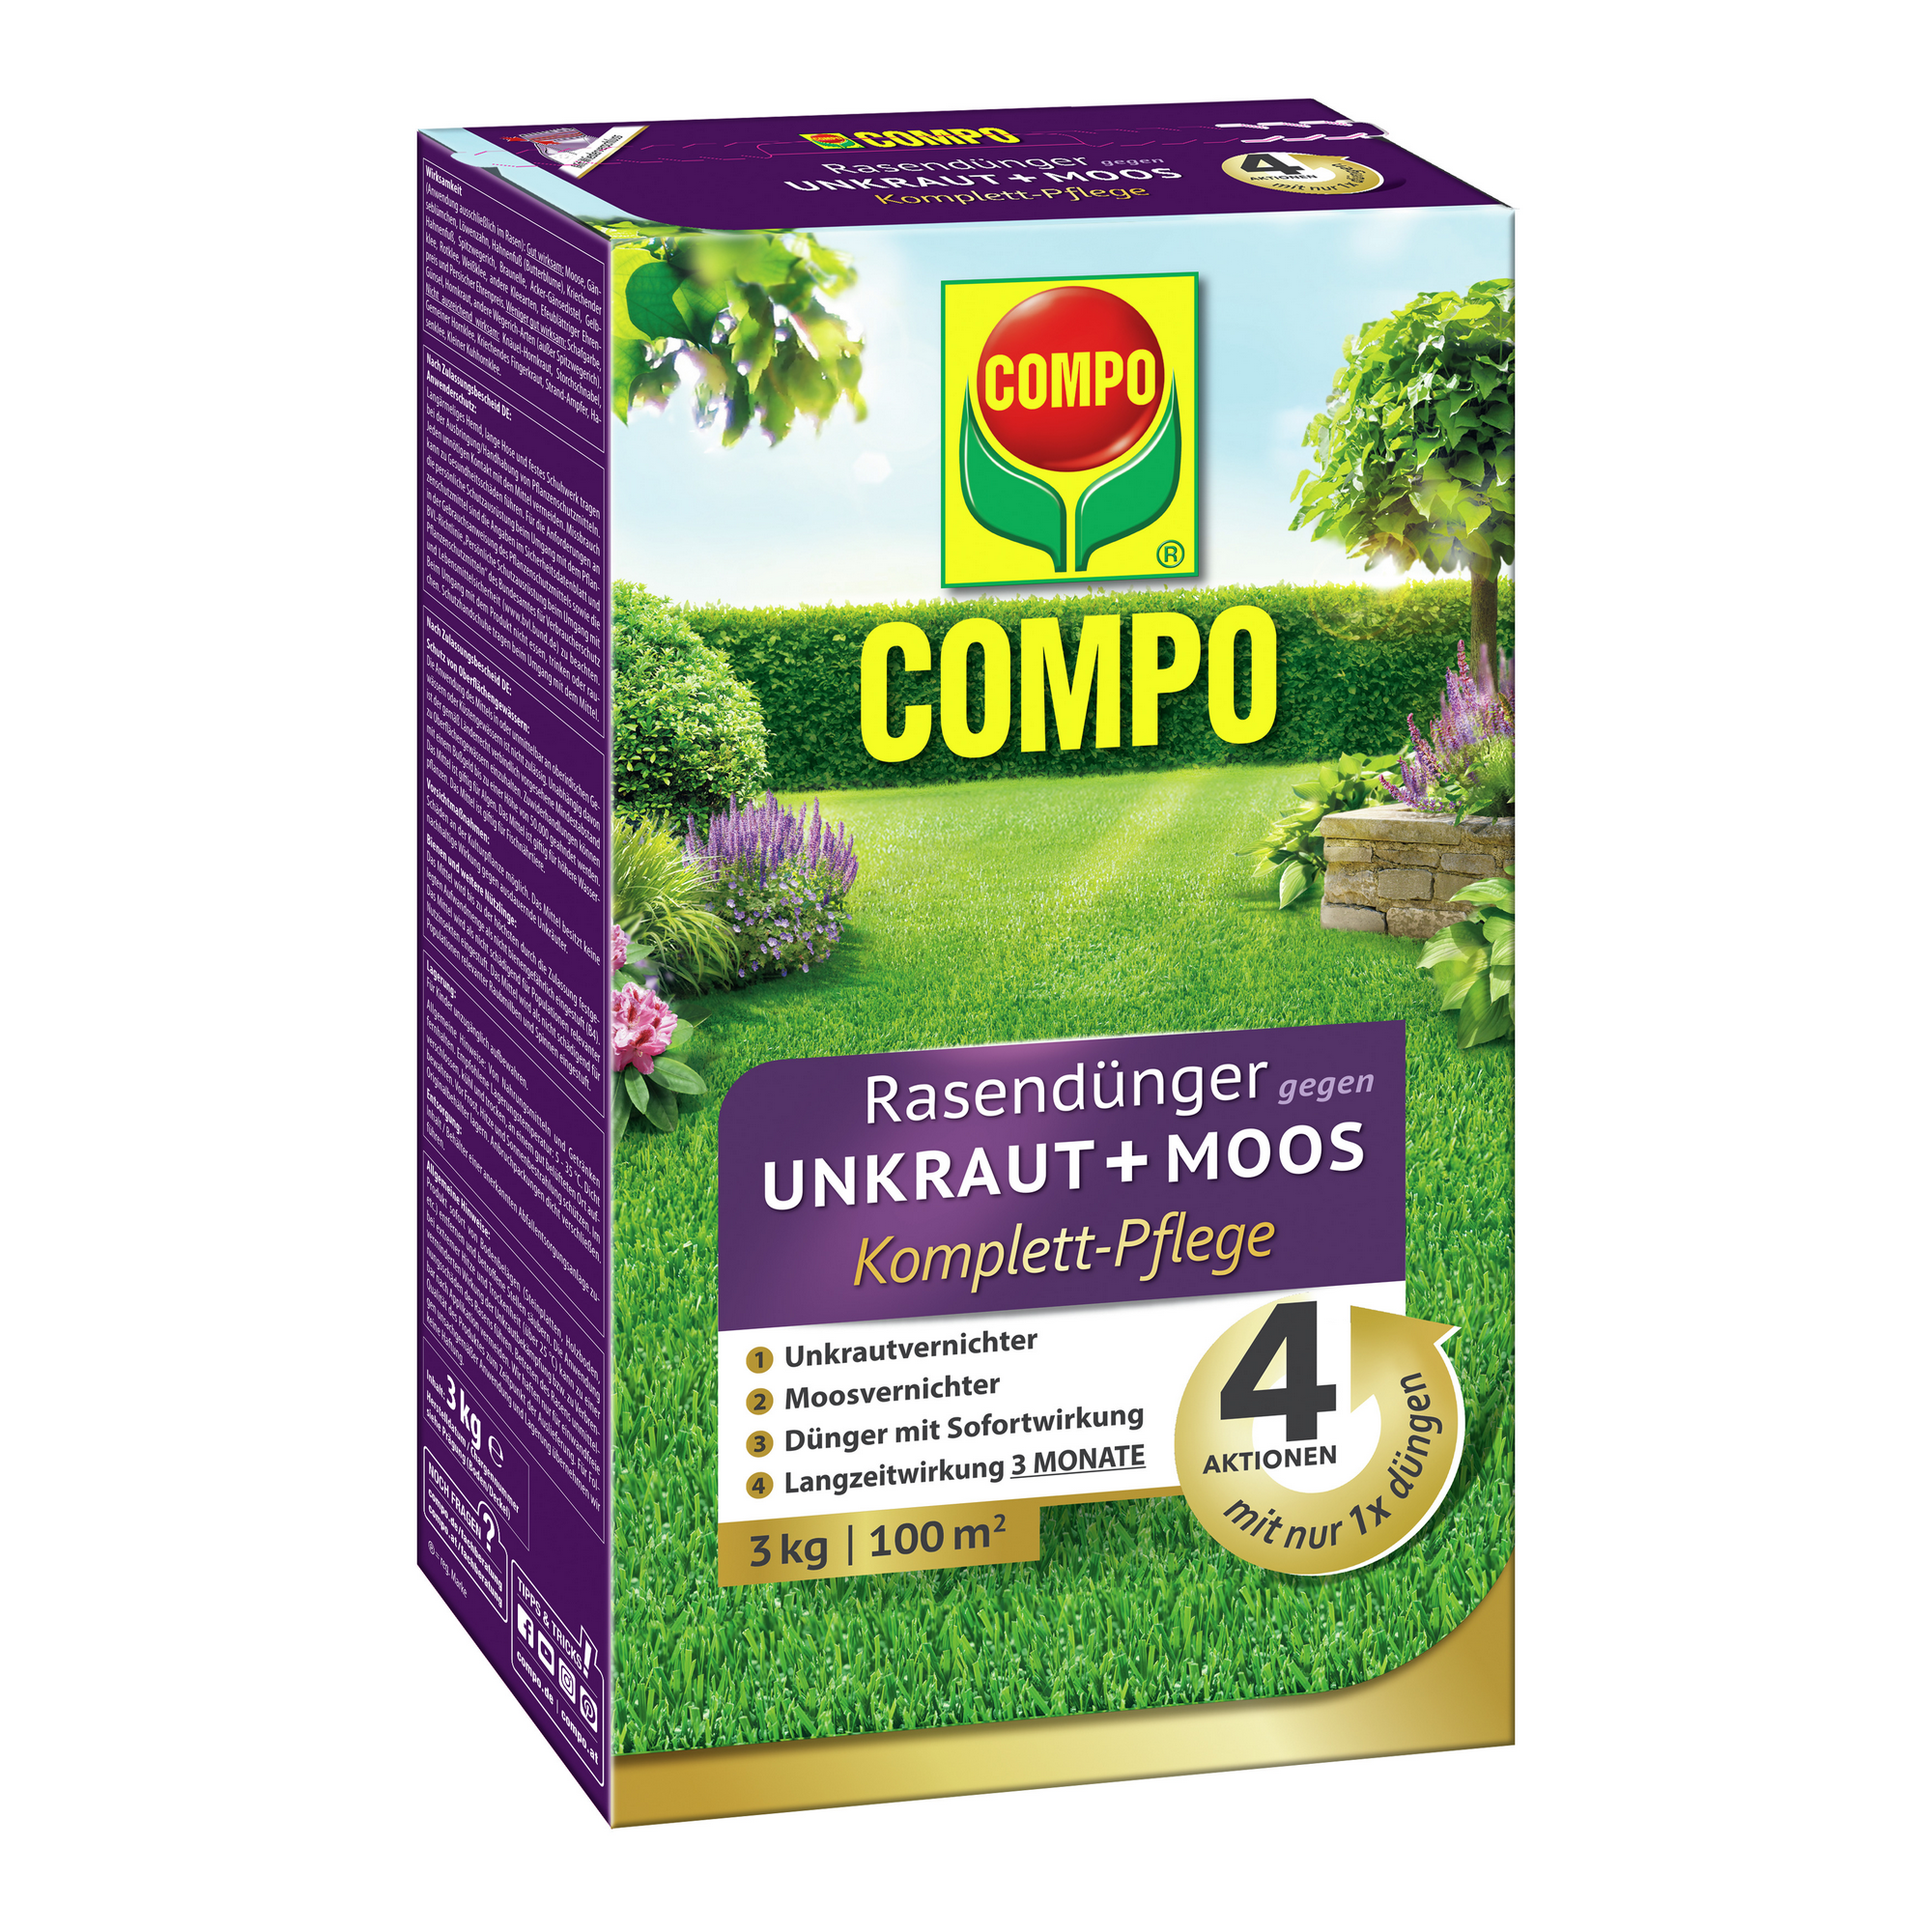 COMPO Rasendünger gegen Unkraut + Moos Komplettpflege 3 kg + product picture